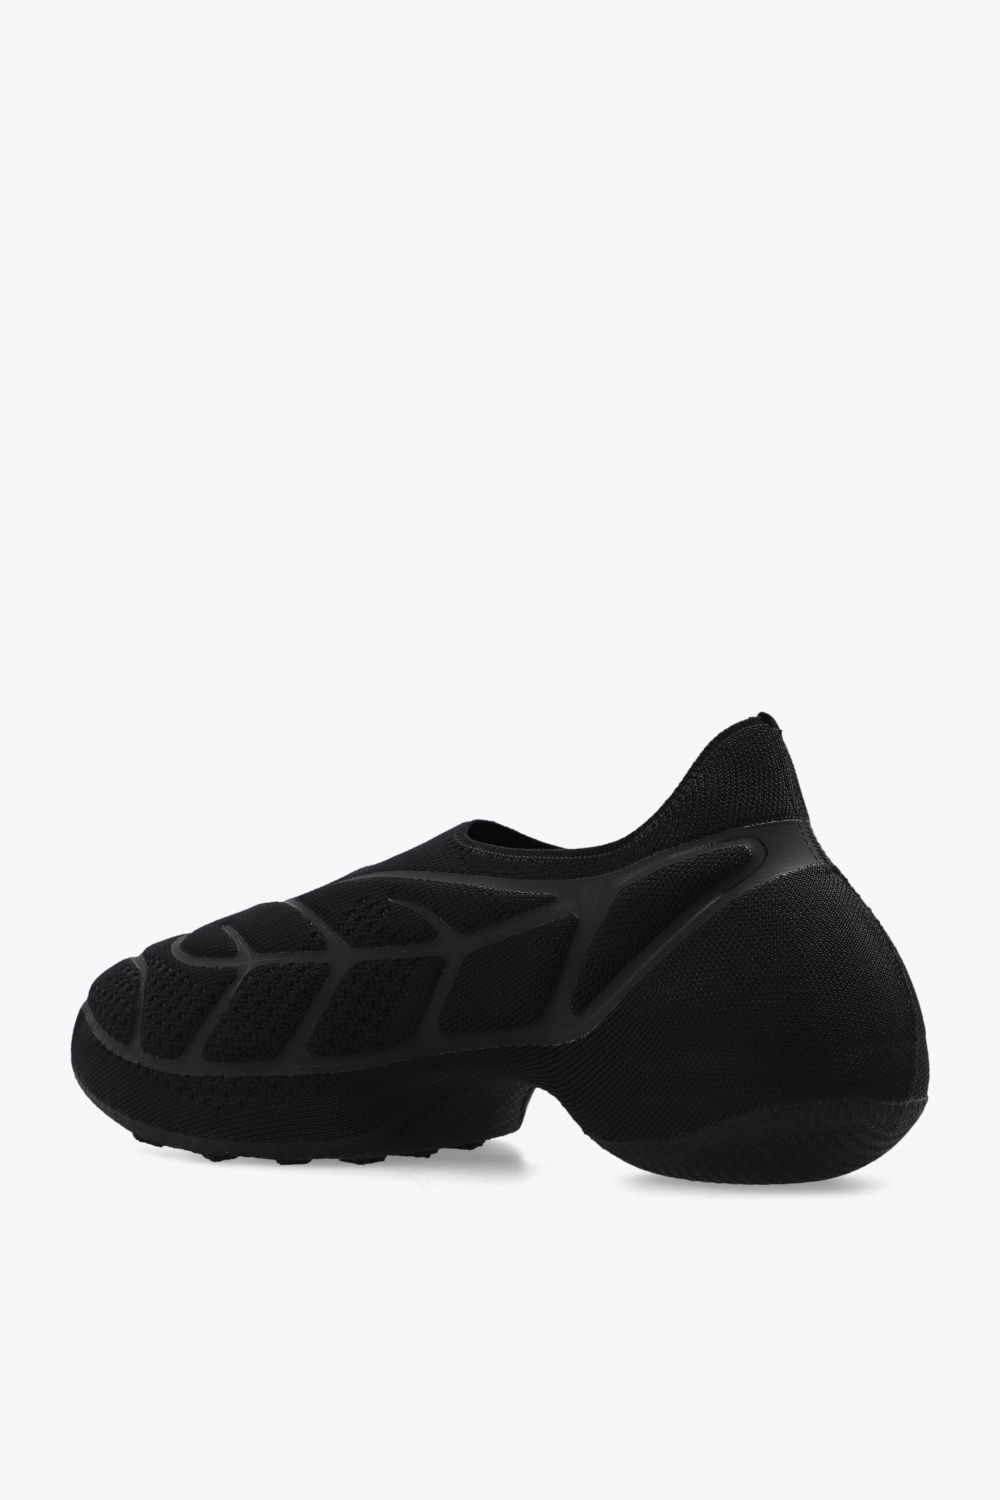 Givenchy 'TK-360' sneakers | Men's Shoes | Vitkac